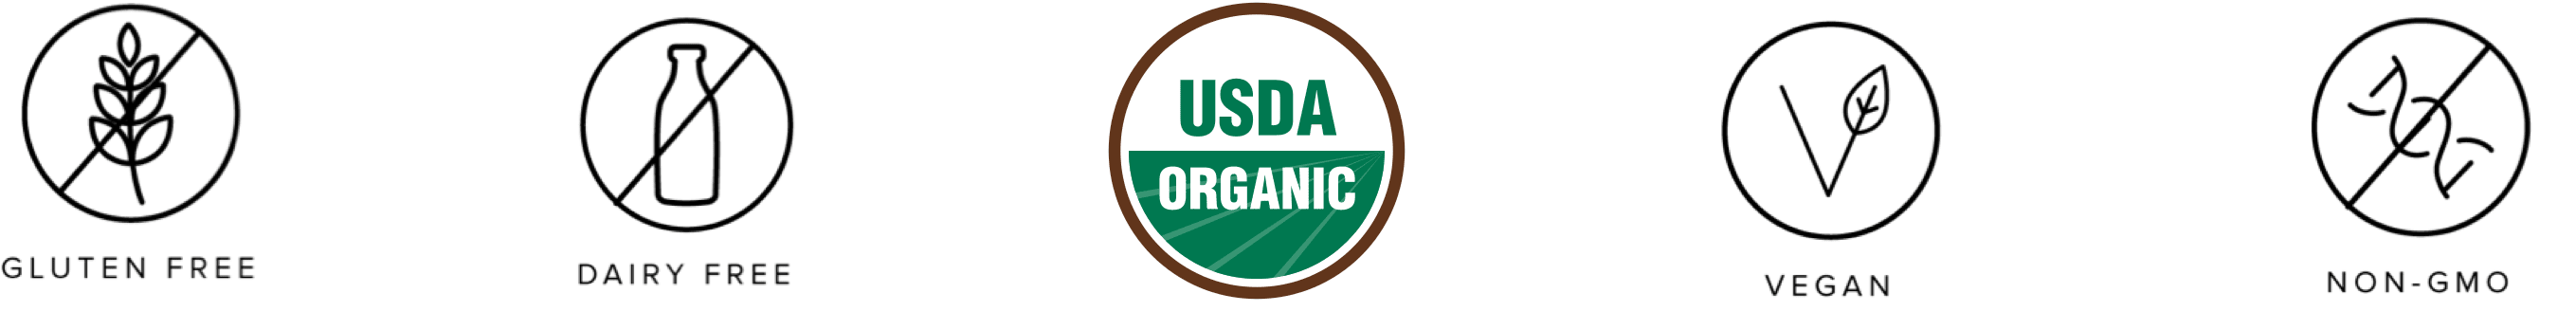 organic,non-gmo,vegan,gluten free,dairy-free